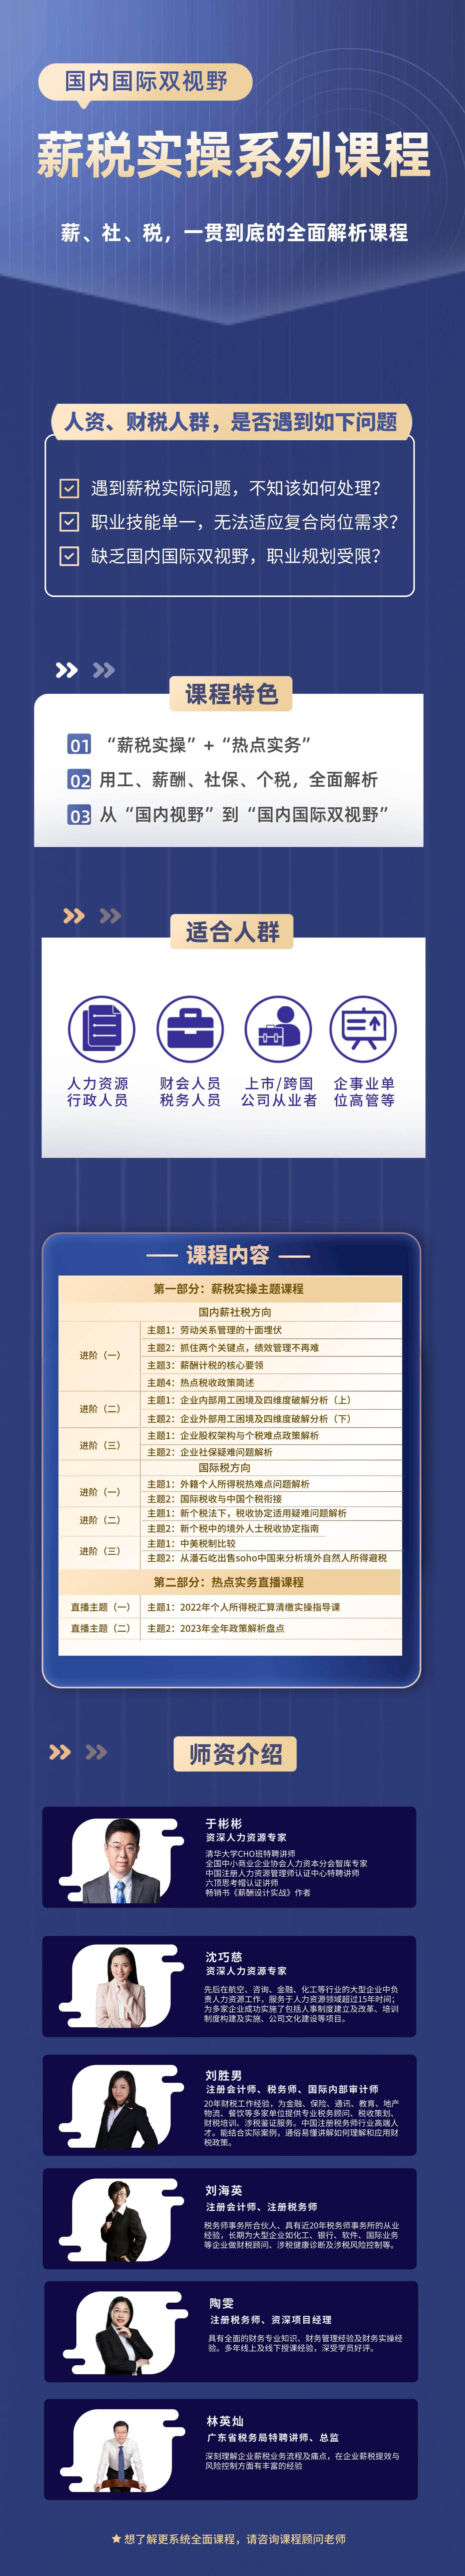 https://simg01.gaodunwangxiao.com/uploadfiles/product-center/202211/08/1f0eb_20221108105150.jpg